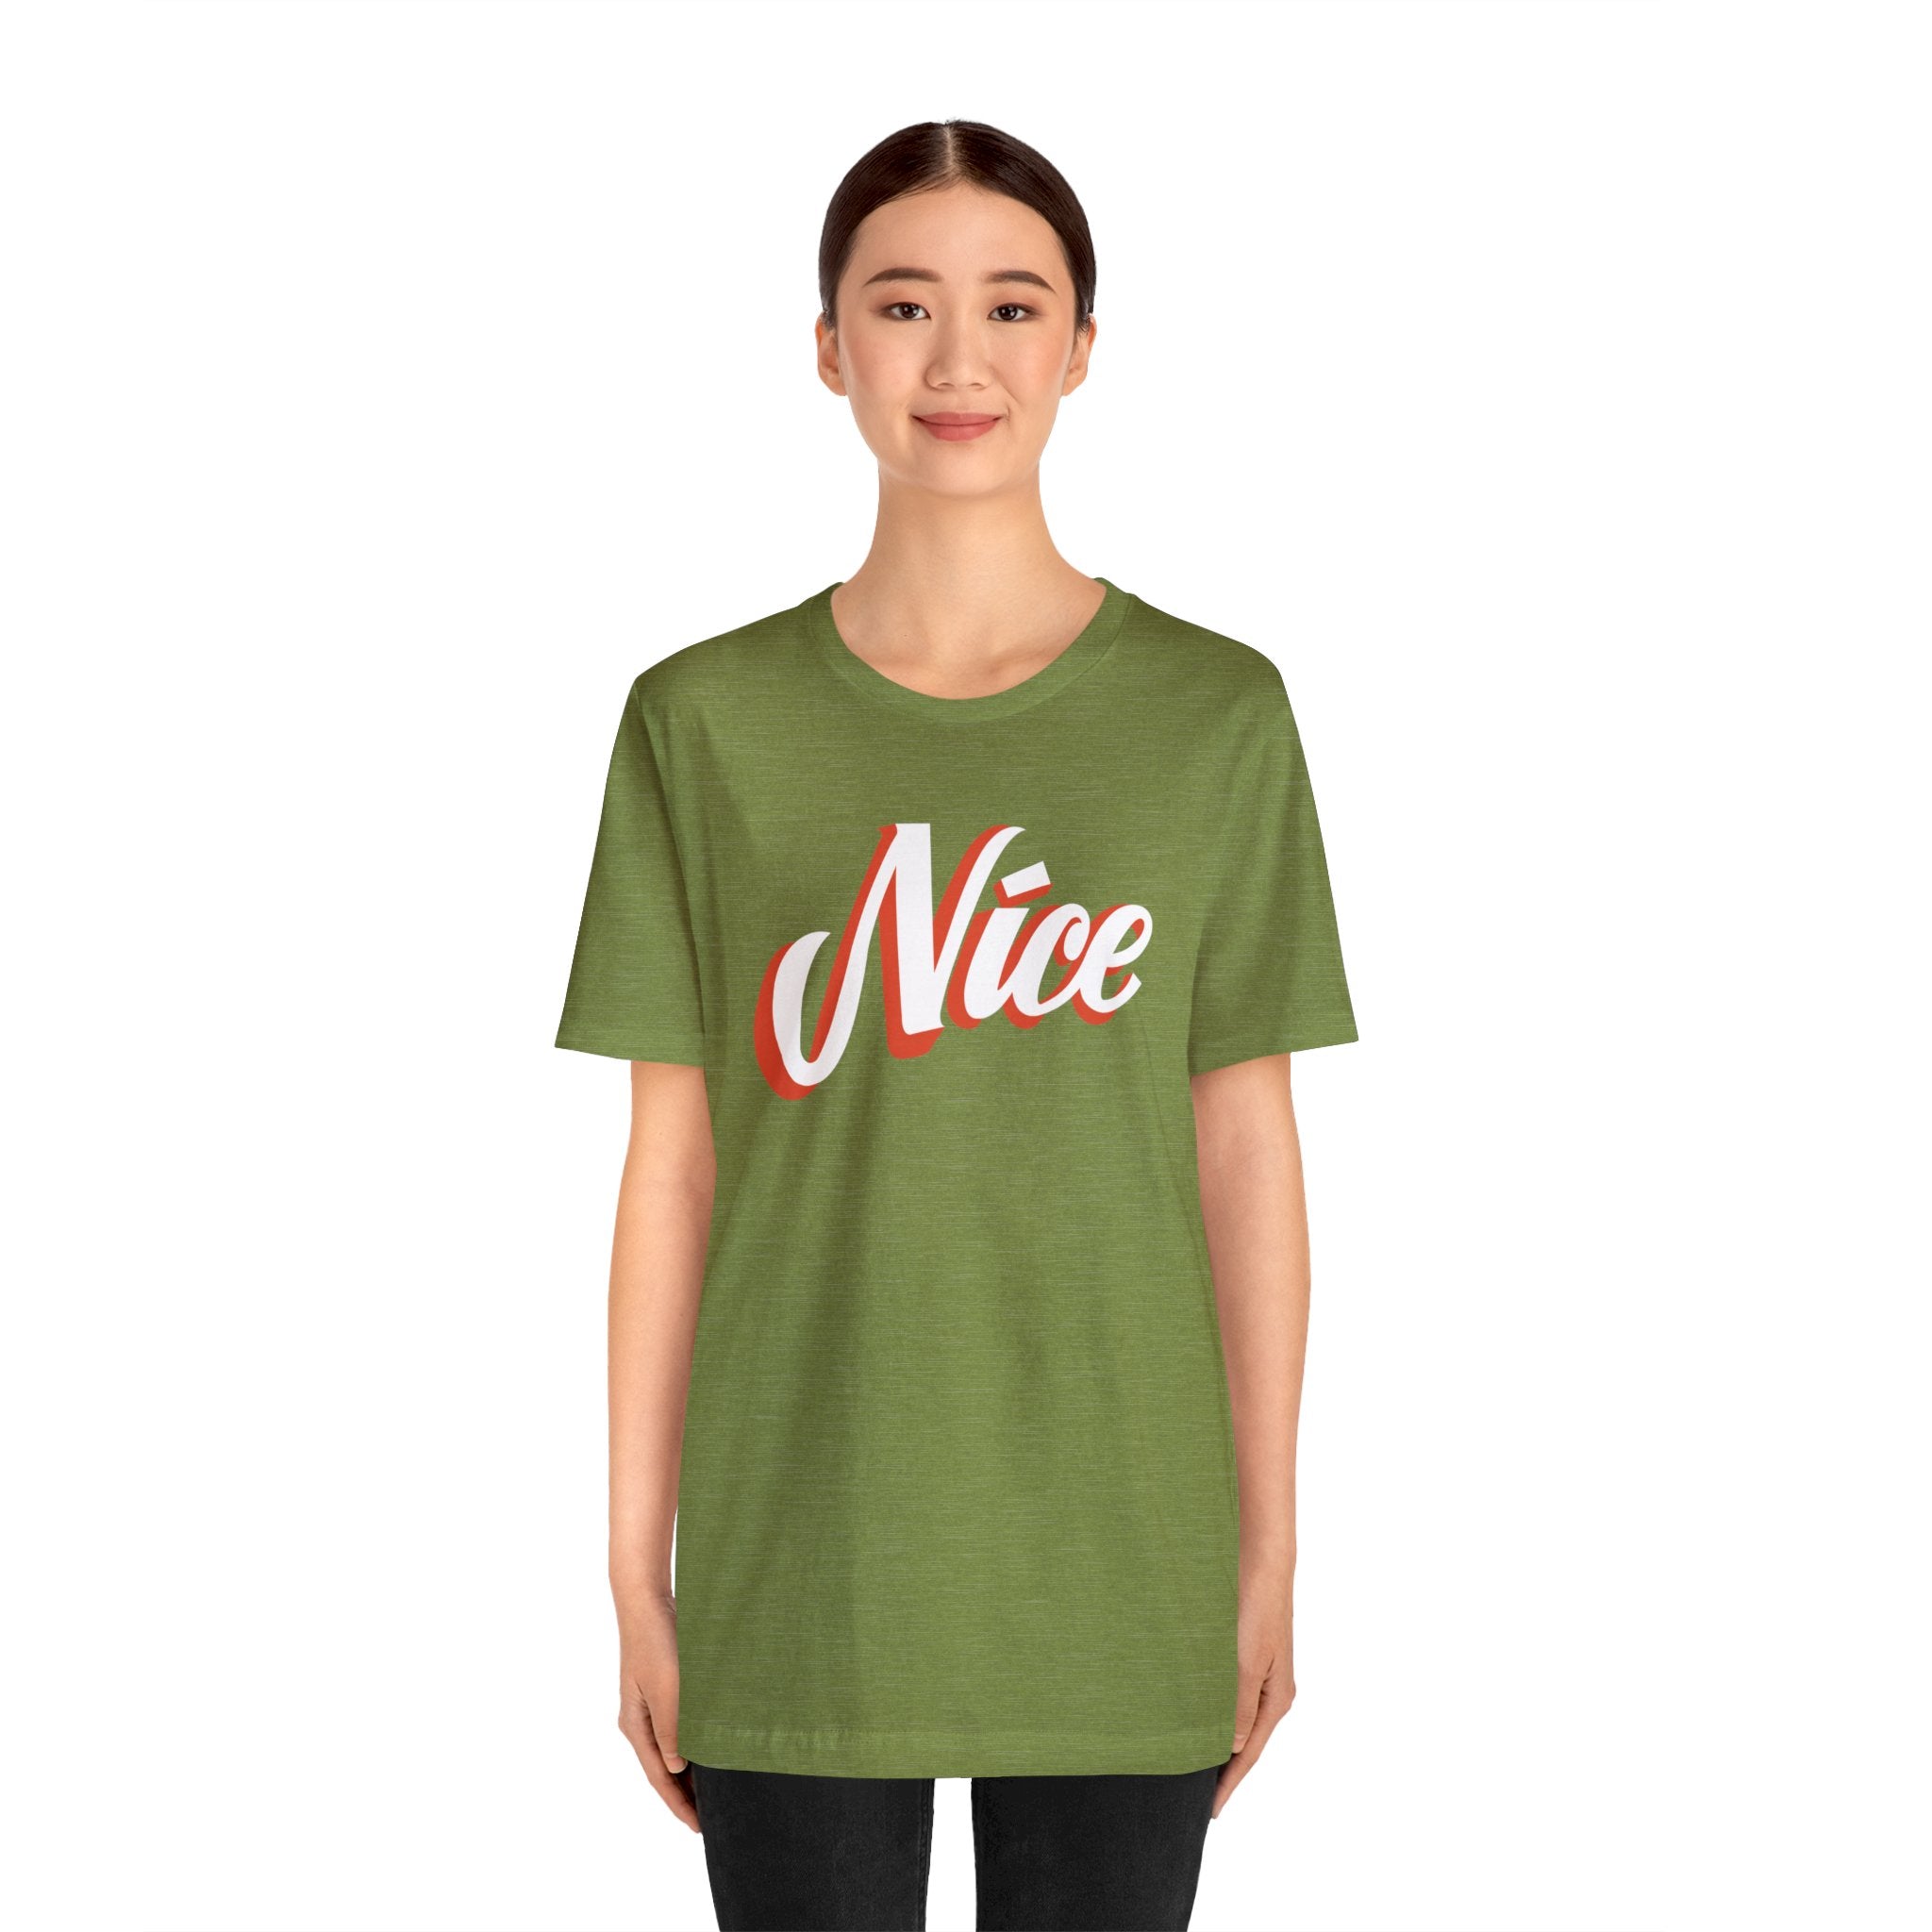 A woman wearing a green Nice T-Shirt, showcasing her geeky style.